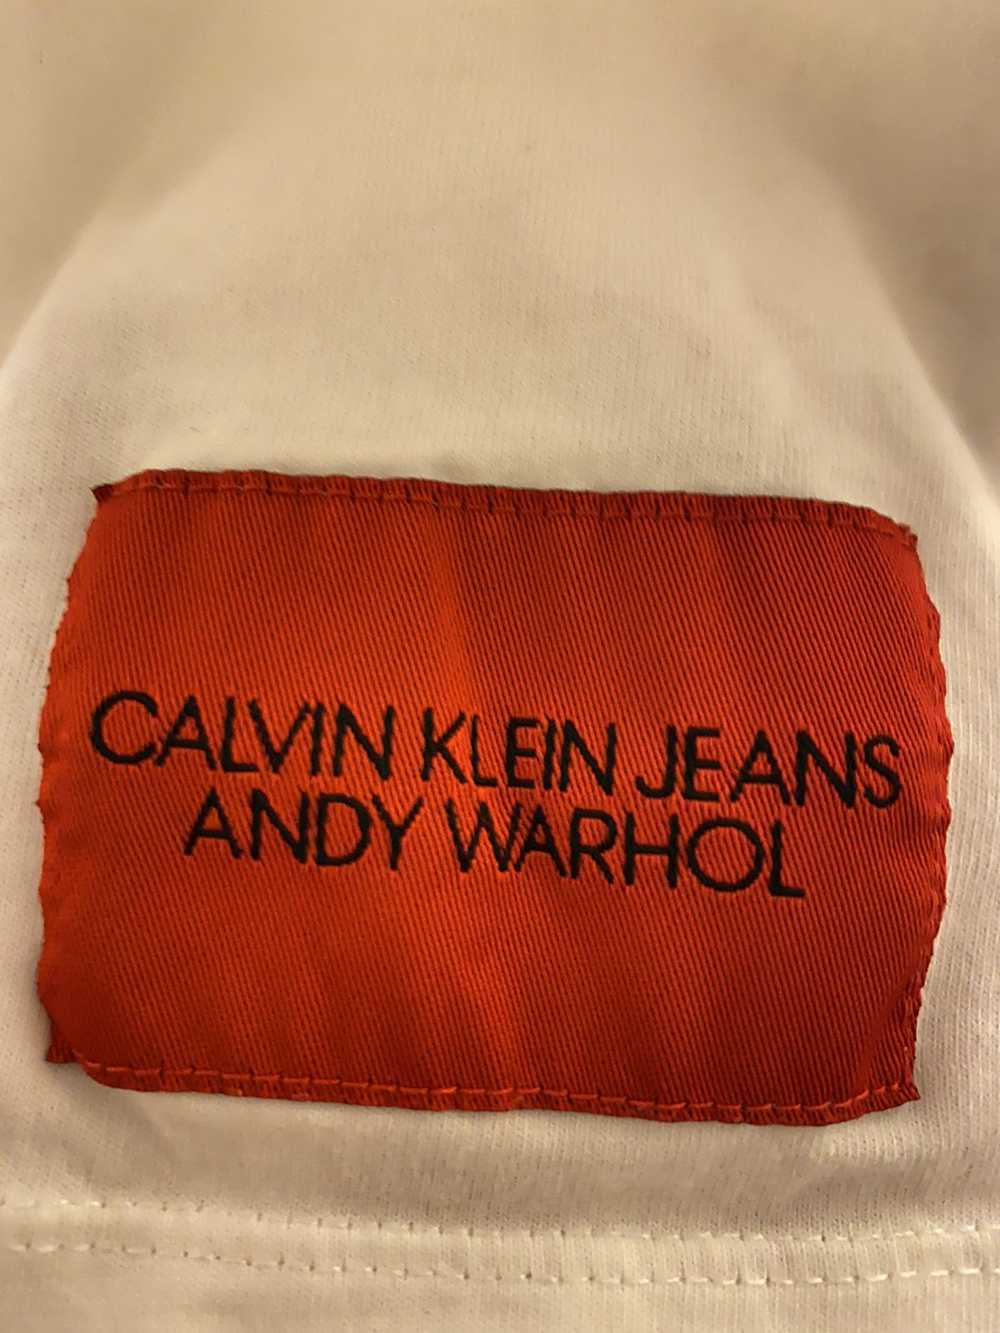 Andy Warhol × Calvin Klein Andy Warhol T shirt - image 5